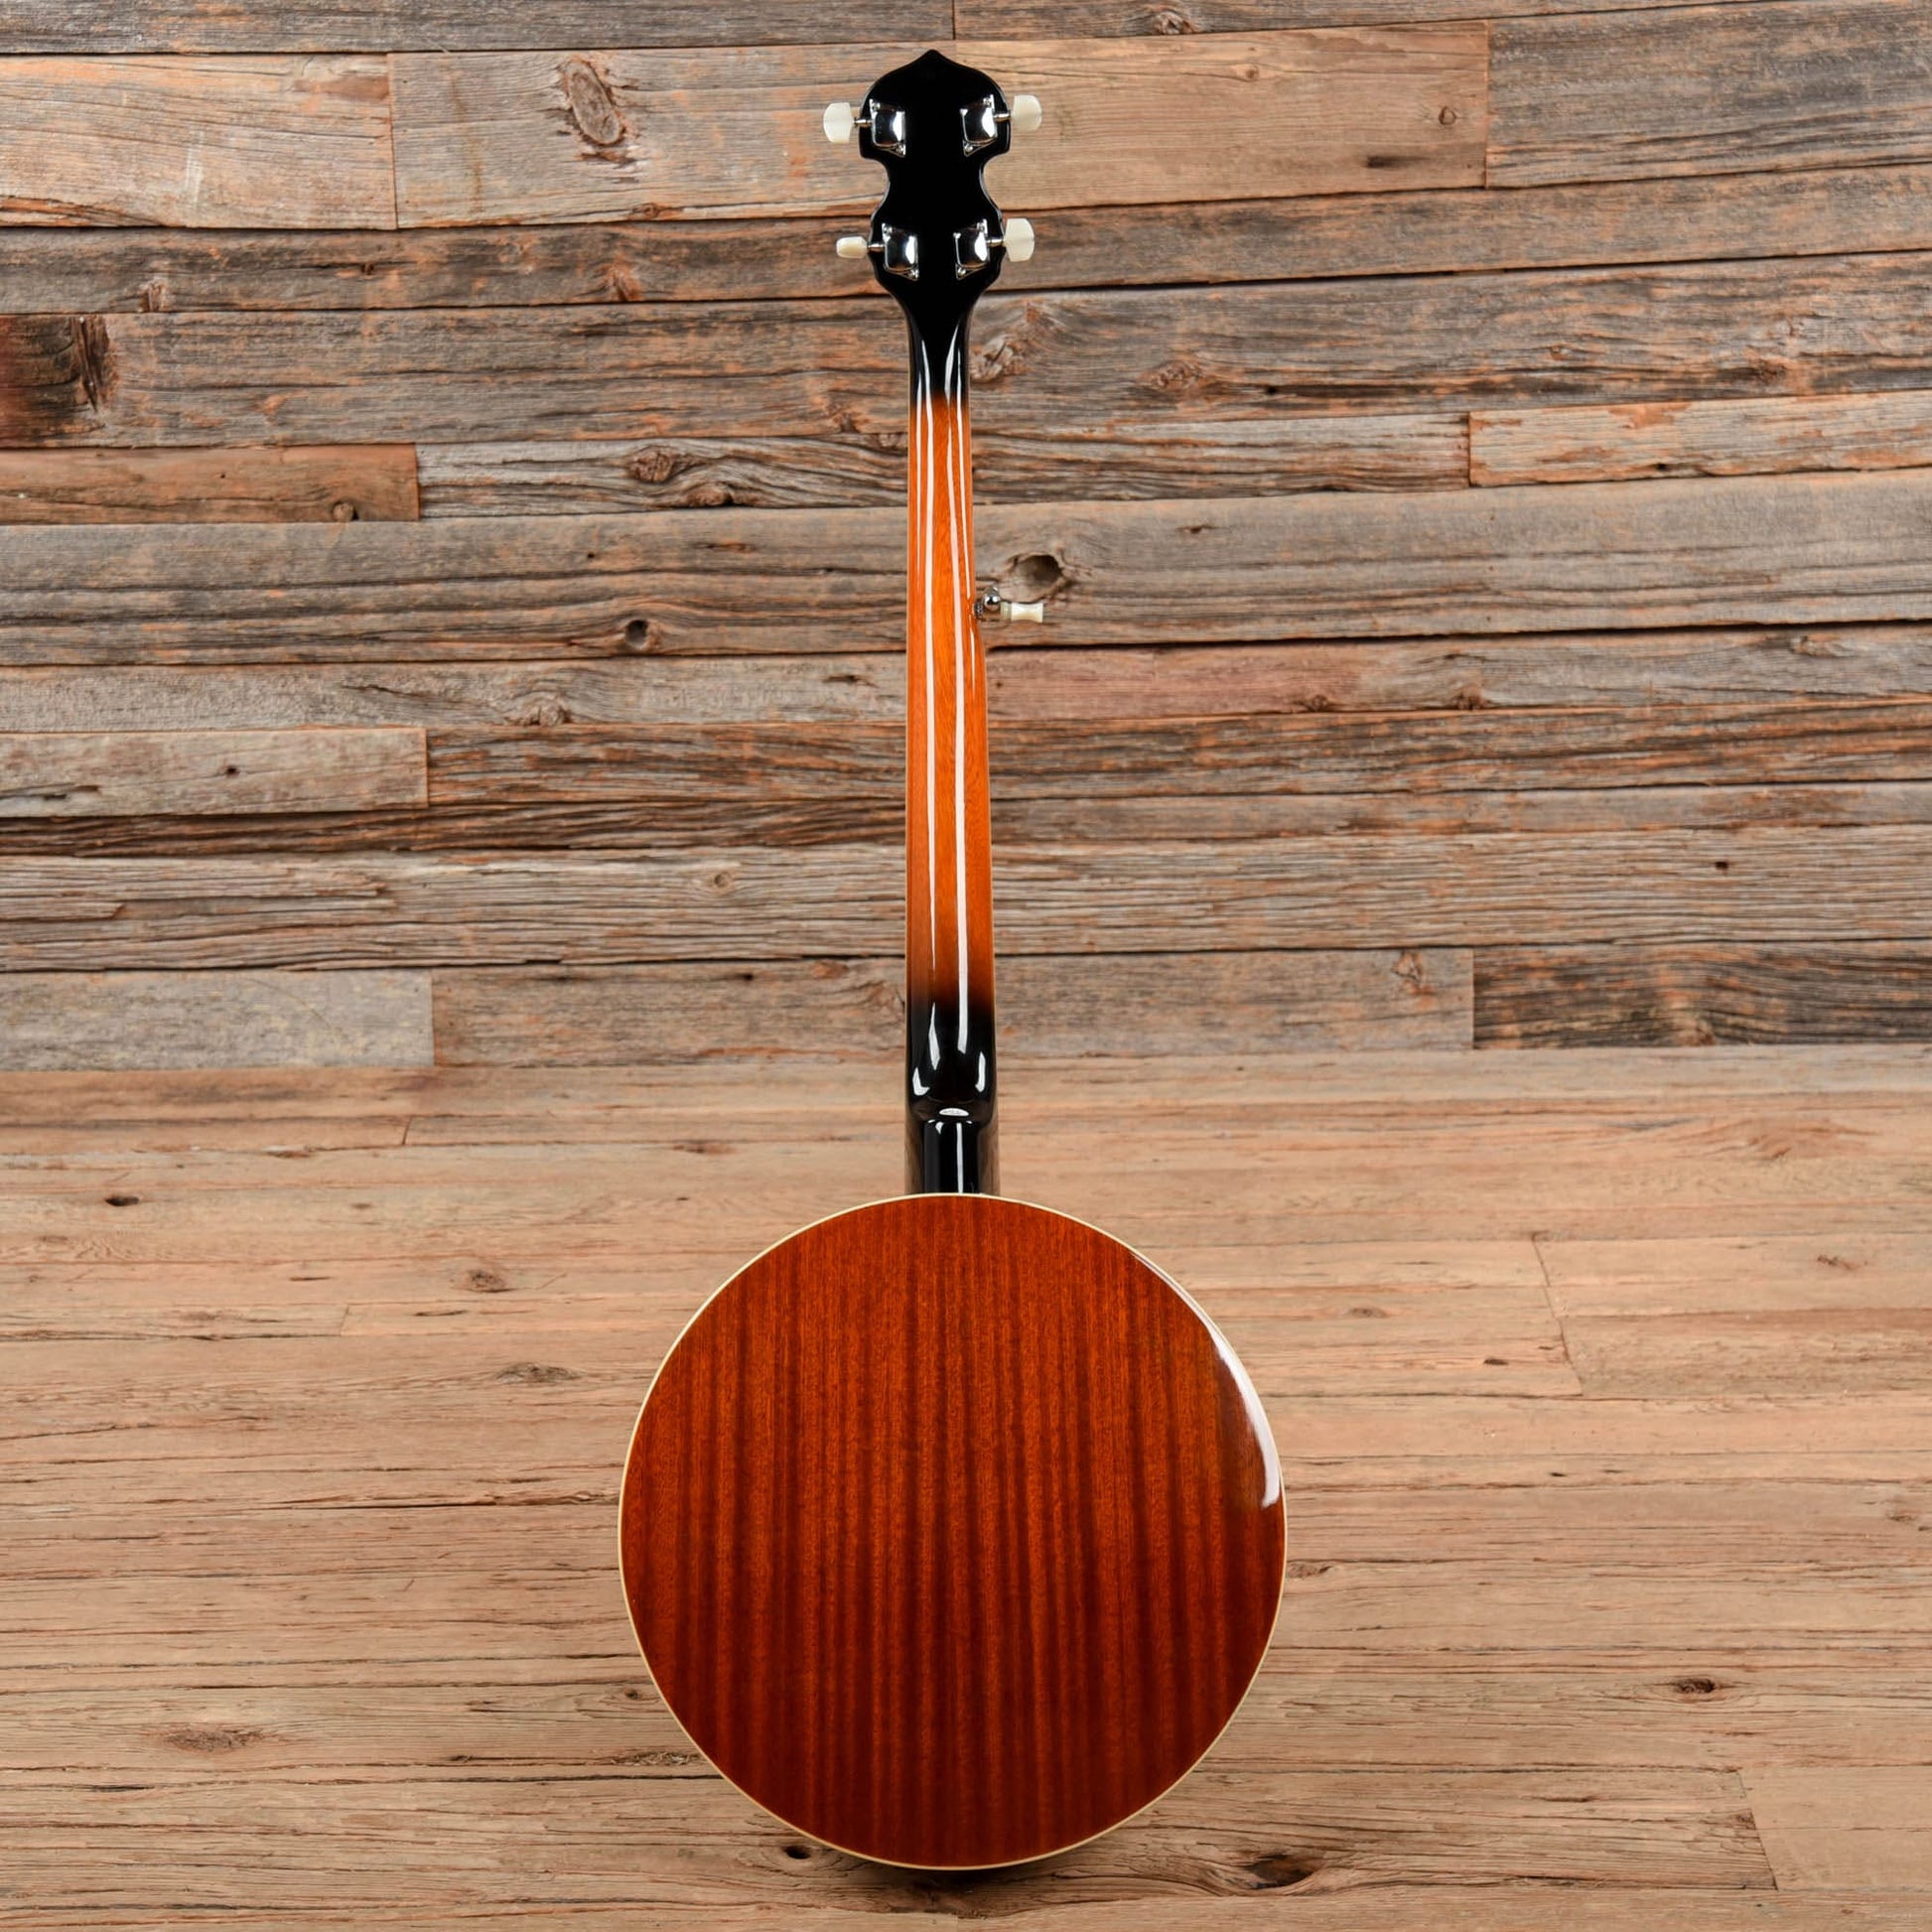 Danville BJ-30 Banjo Folk Instruments / Banjos